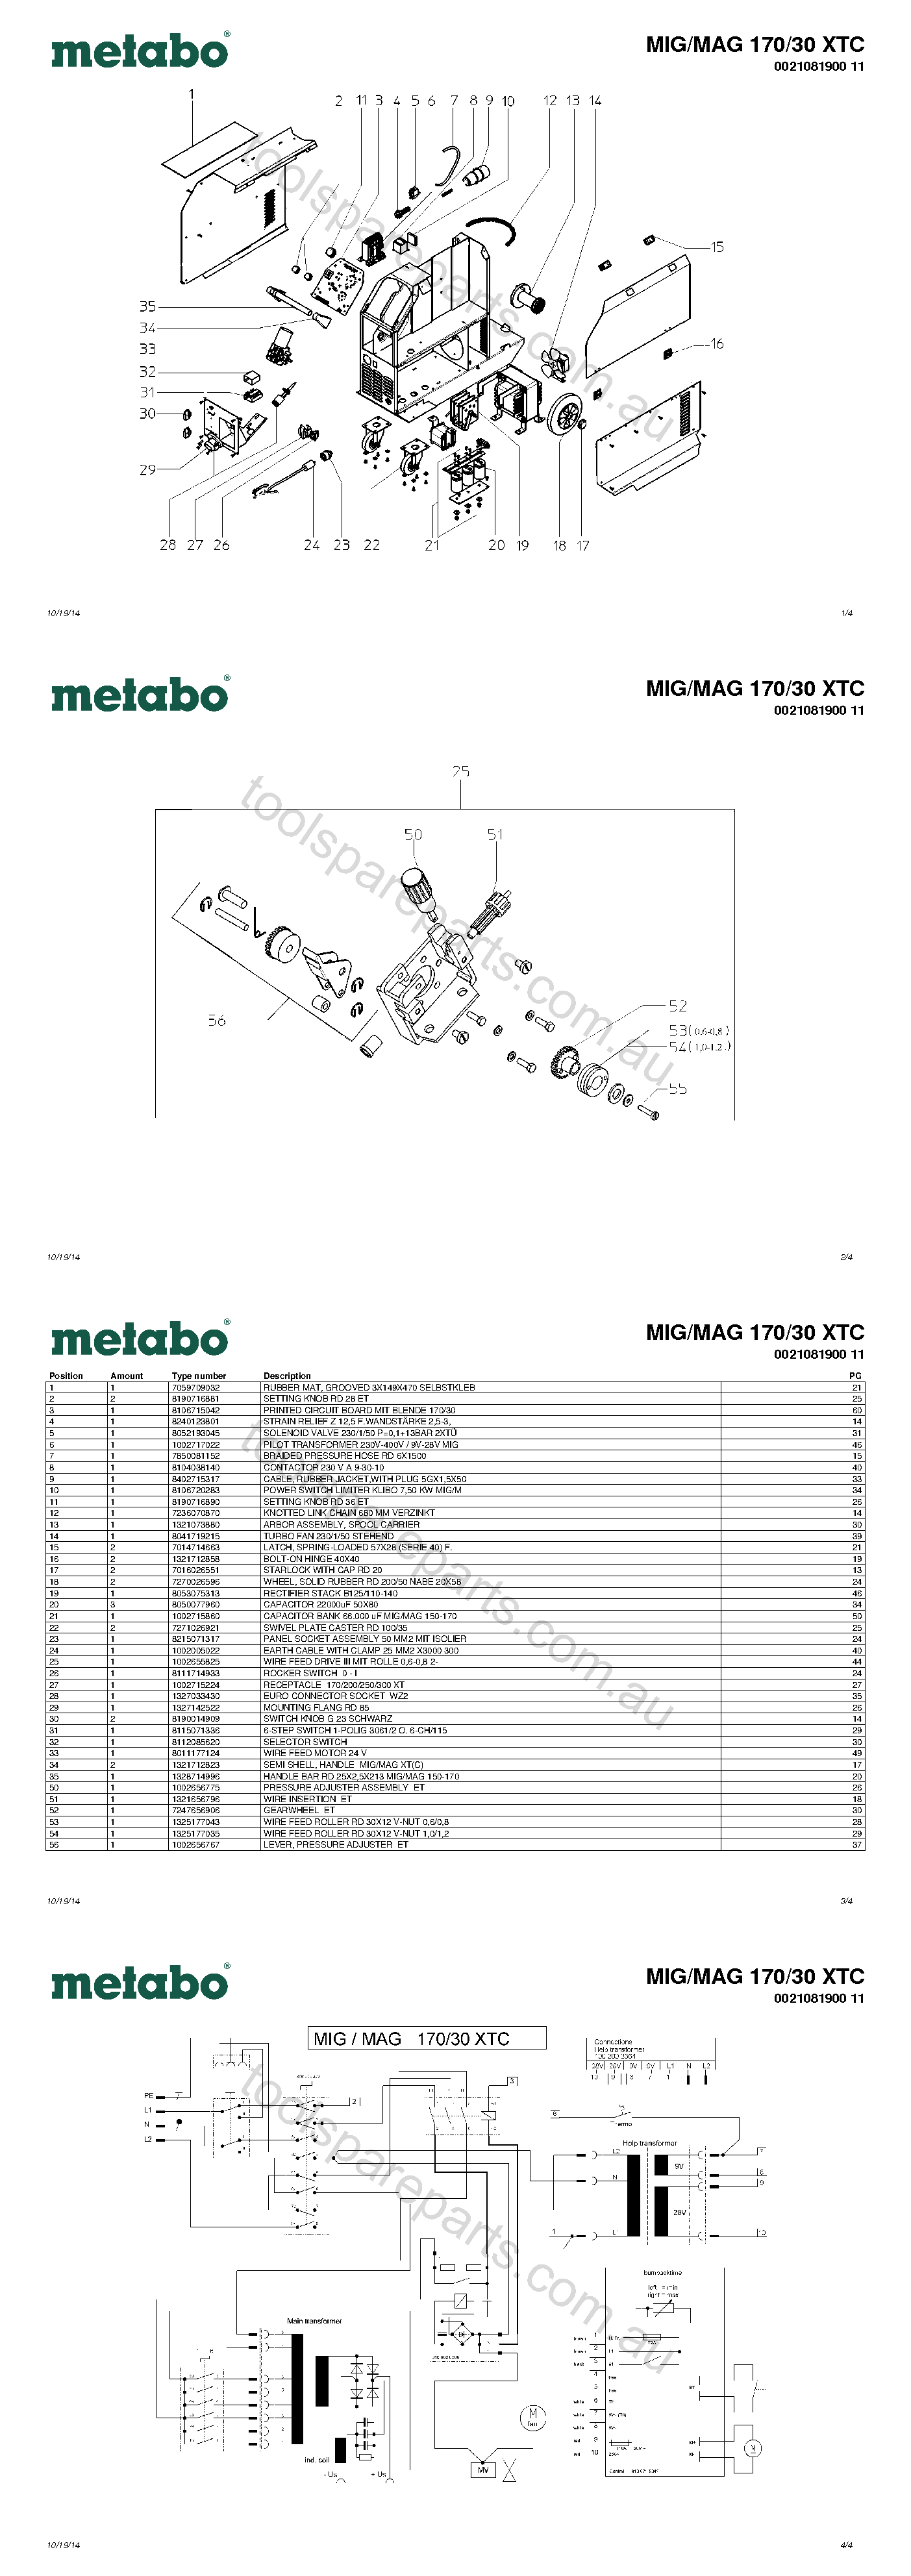 Metabo MIG/MAG 170/30 XTC 0021081900 11  Diagram 1